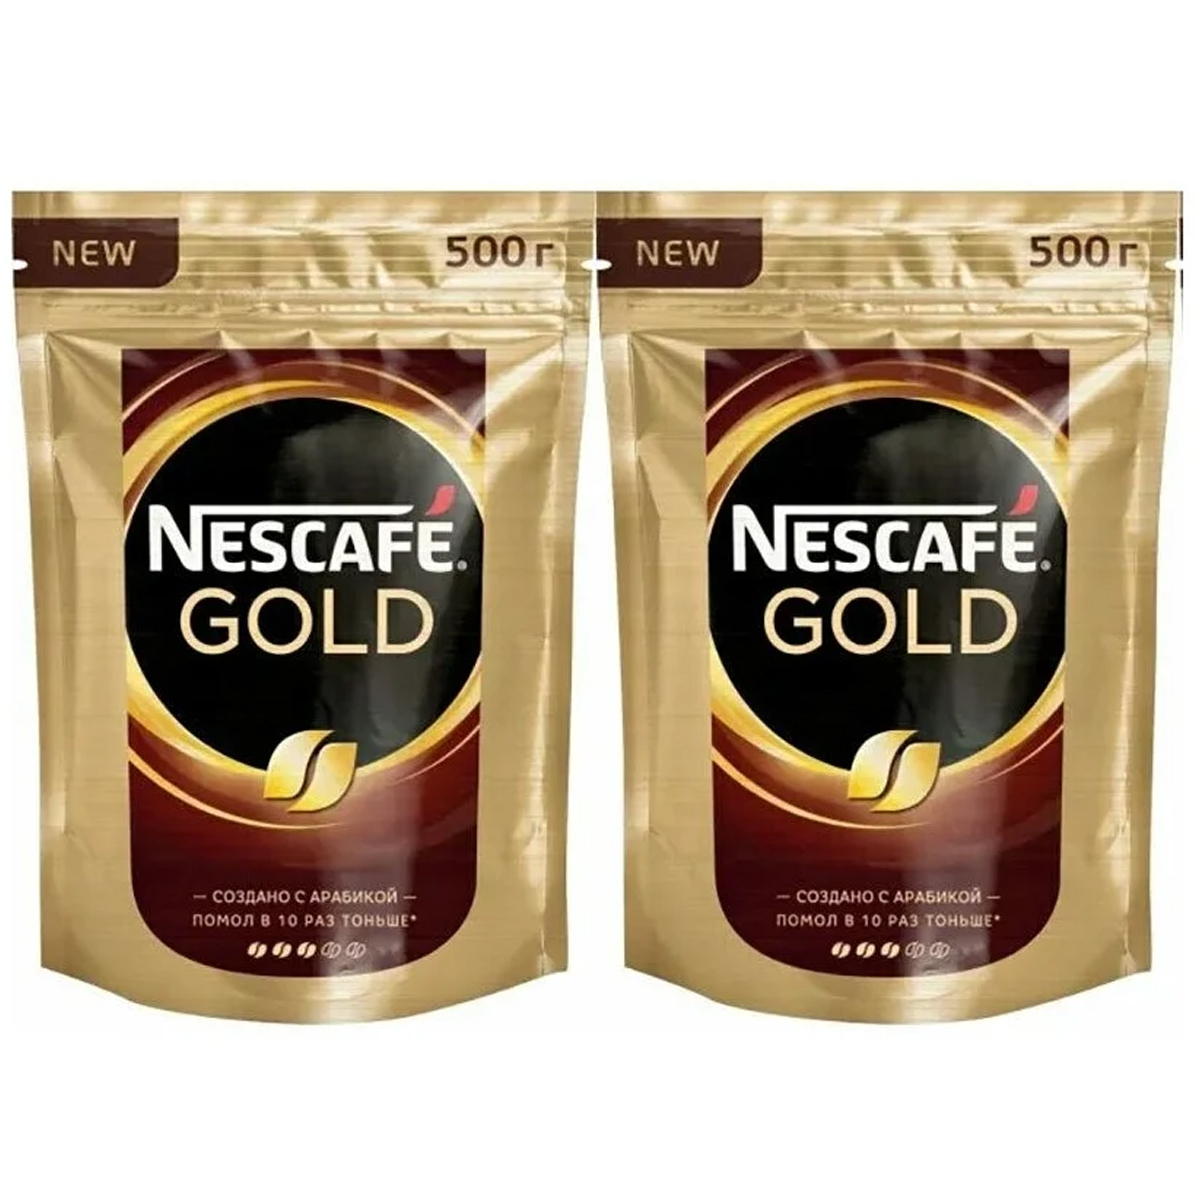 Nescafe gold пакет. Кофе Нескафе Голд 500 гр растворимый сублимированный. Нескафе Голд мягкая упаковка 130 г. Кофе Nescafe Gold растворимый 500 г. Кофе Нескафе Голд 900 гр.